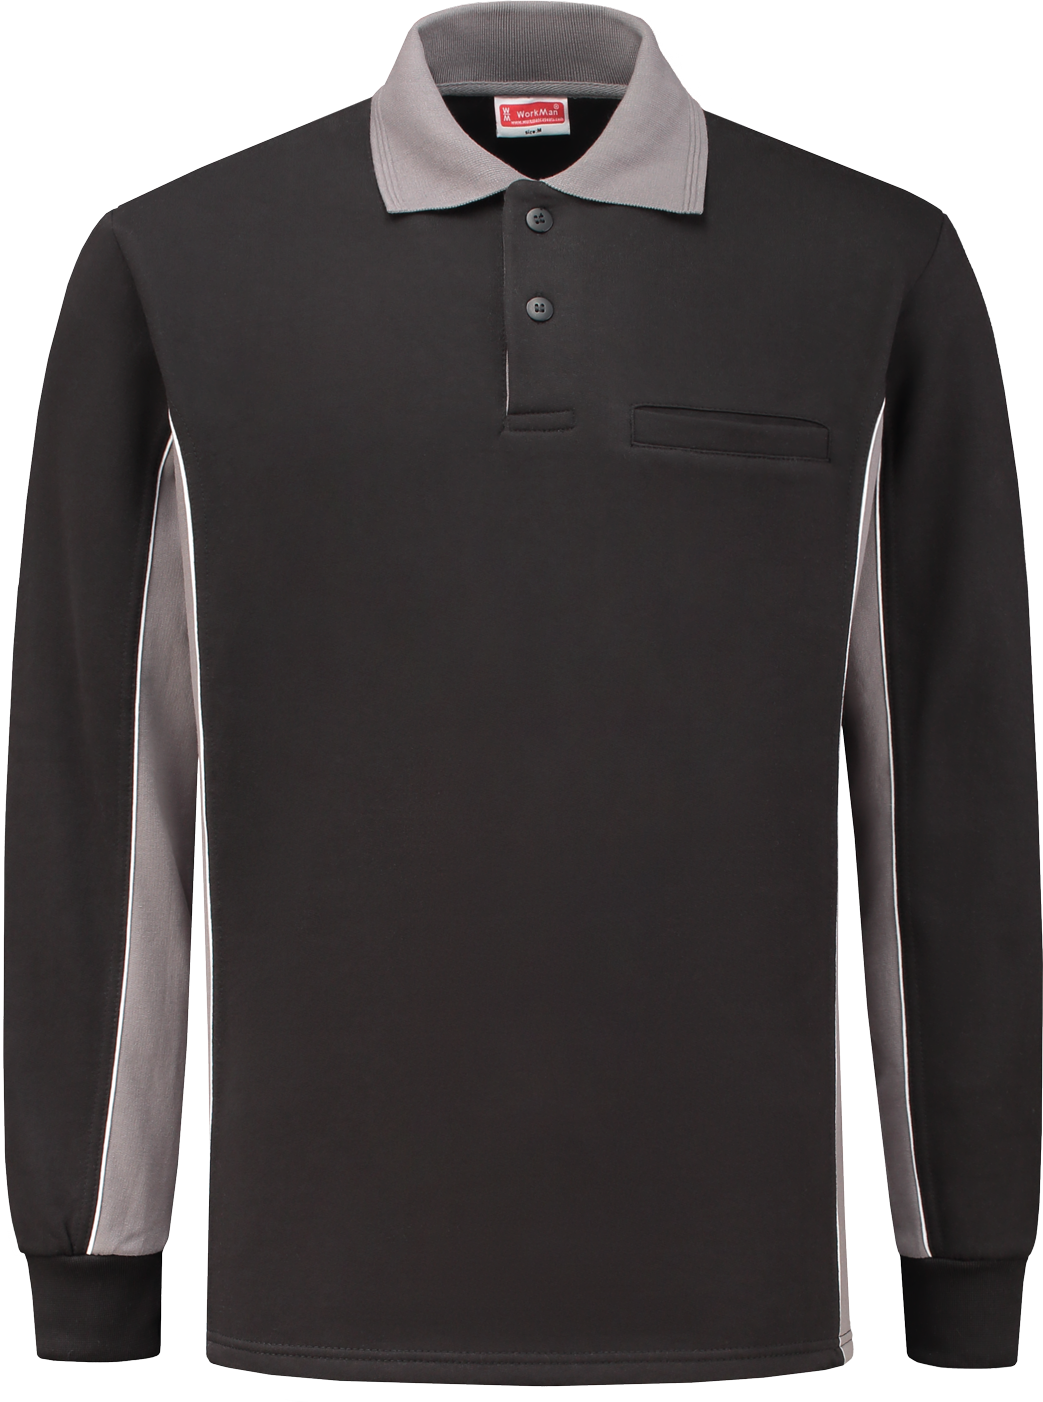 10.6.2406.01 2406 Polosweater Bi-Colour Zwart / Grijs S